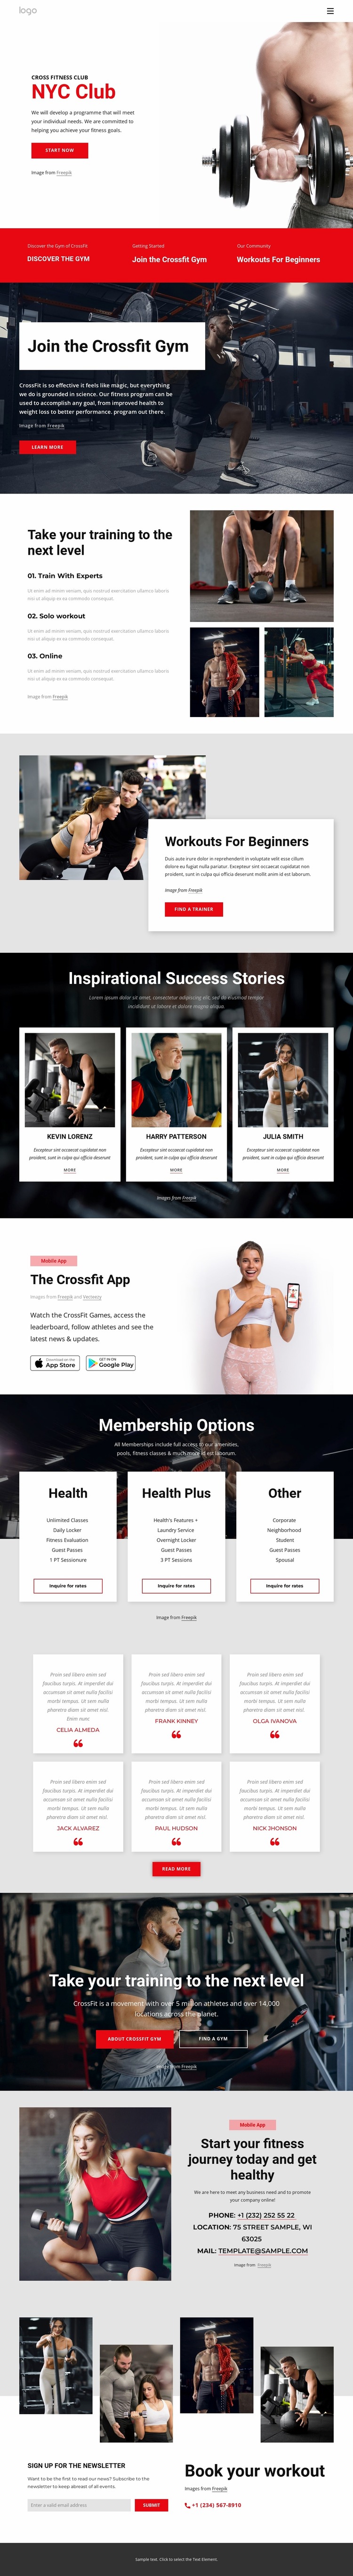 Cross fitness club Website Mockup